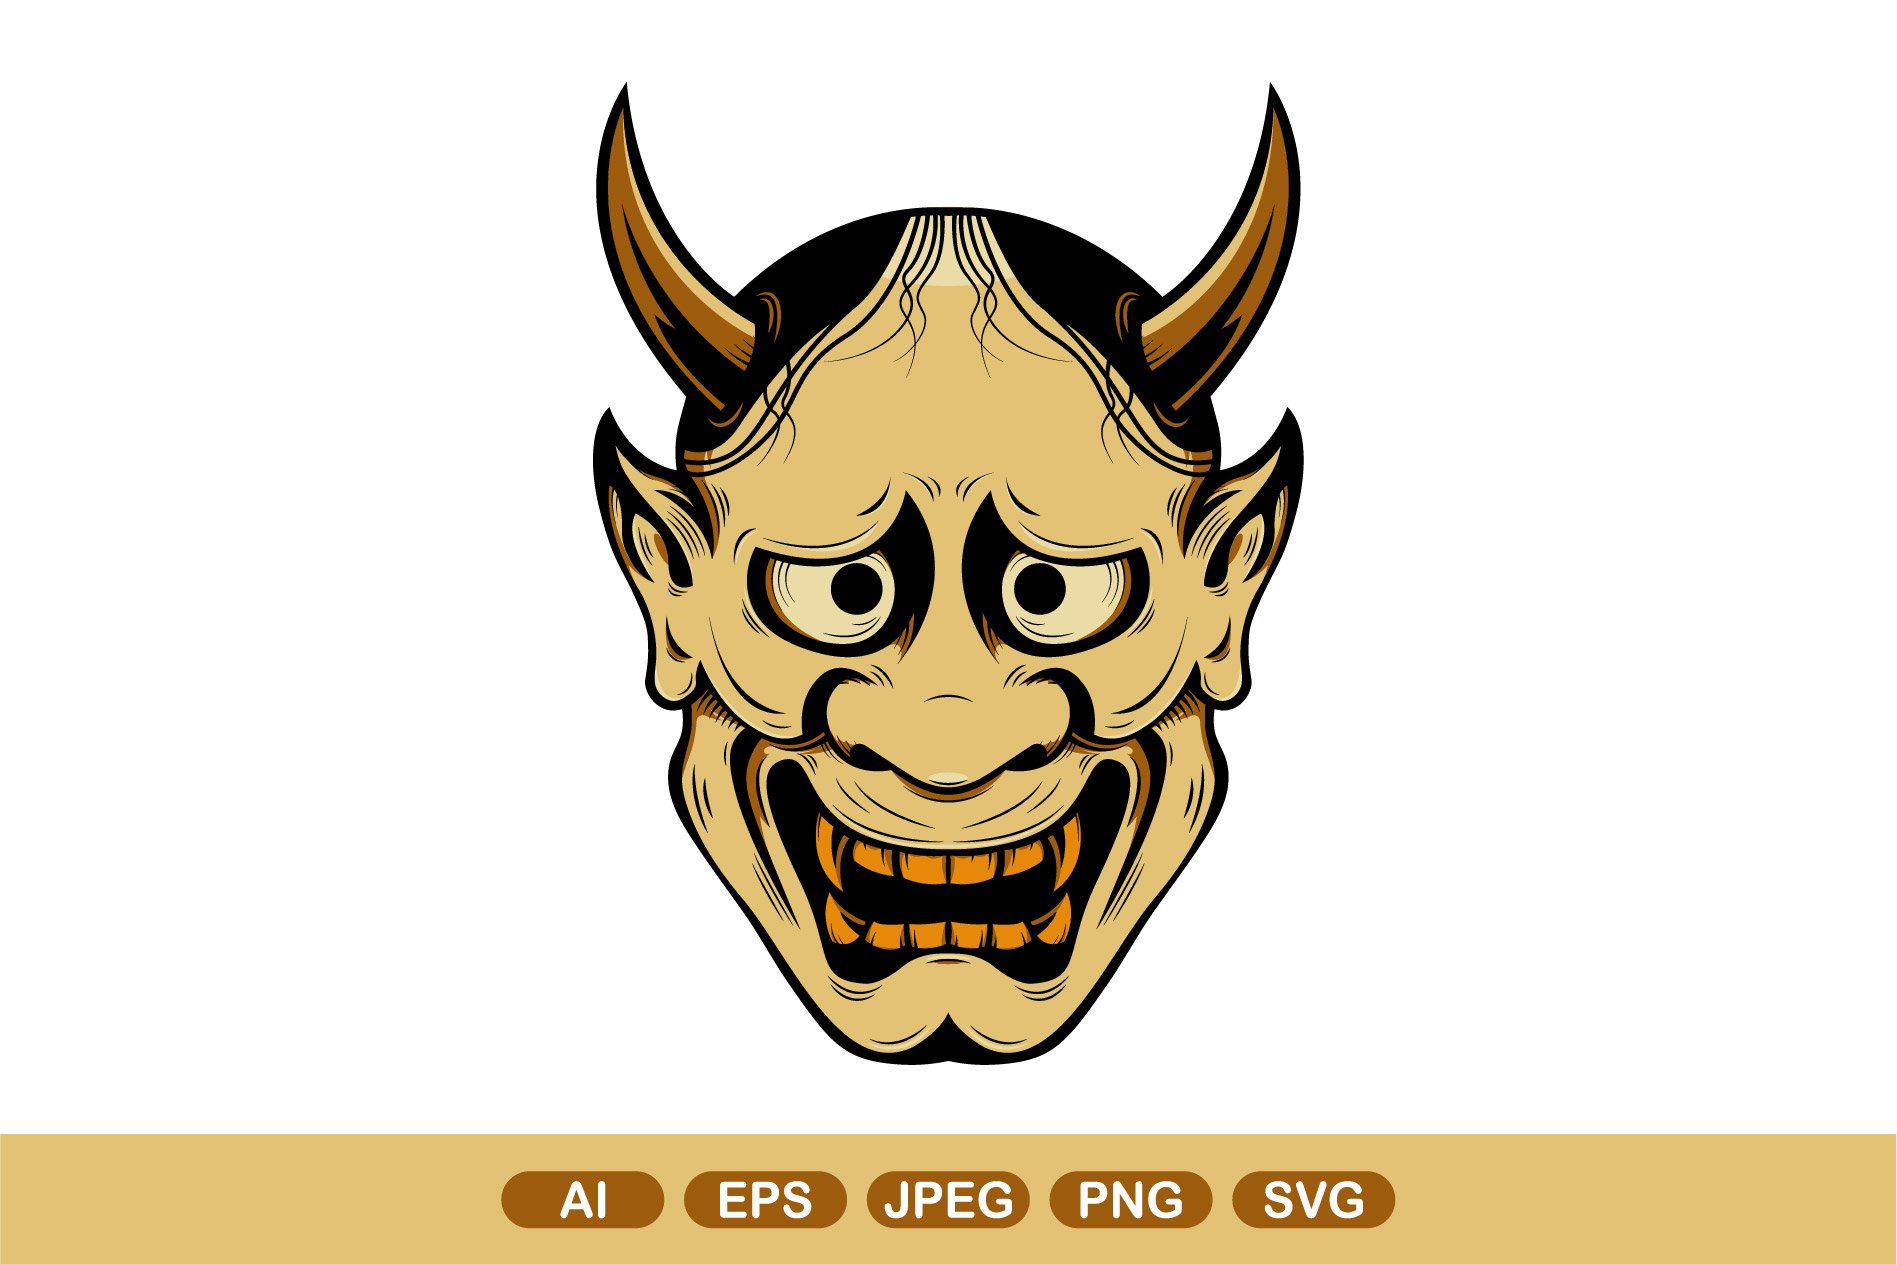 Oni japanese devil mask cover image.